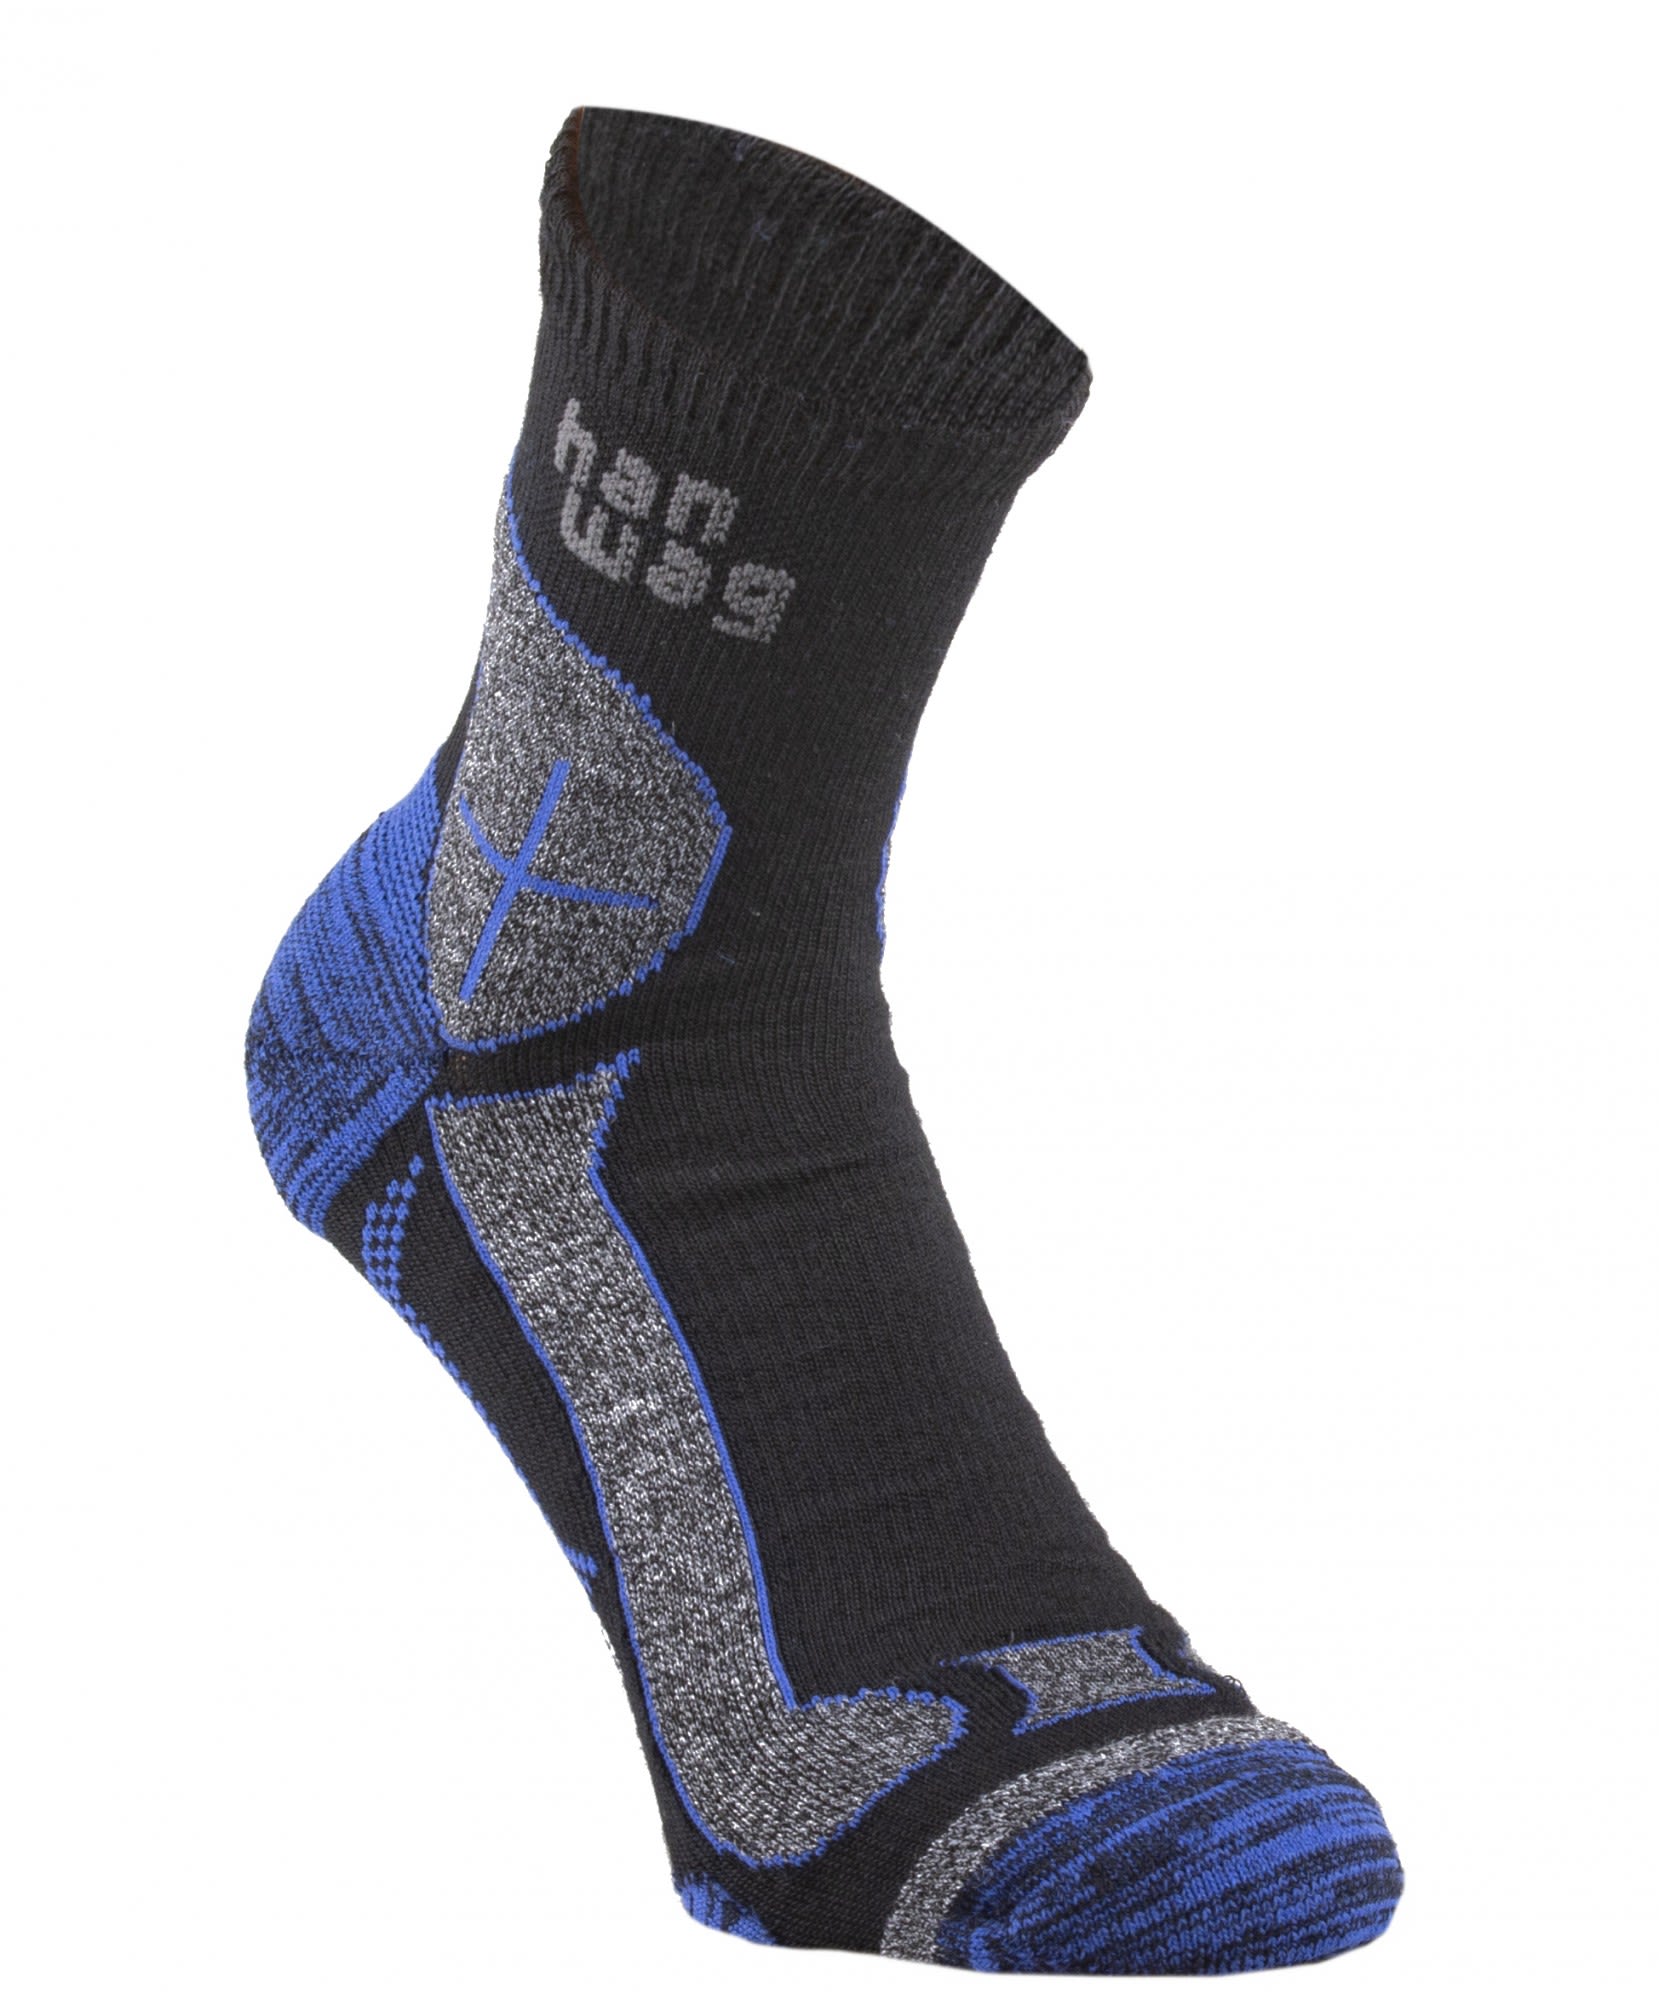 Hanwag Komfortable weiche Merino Socken Black - Royal Blue